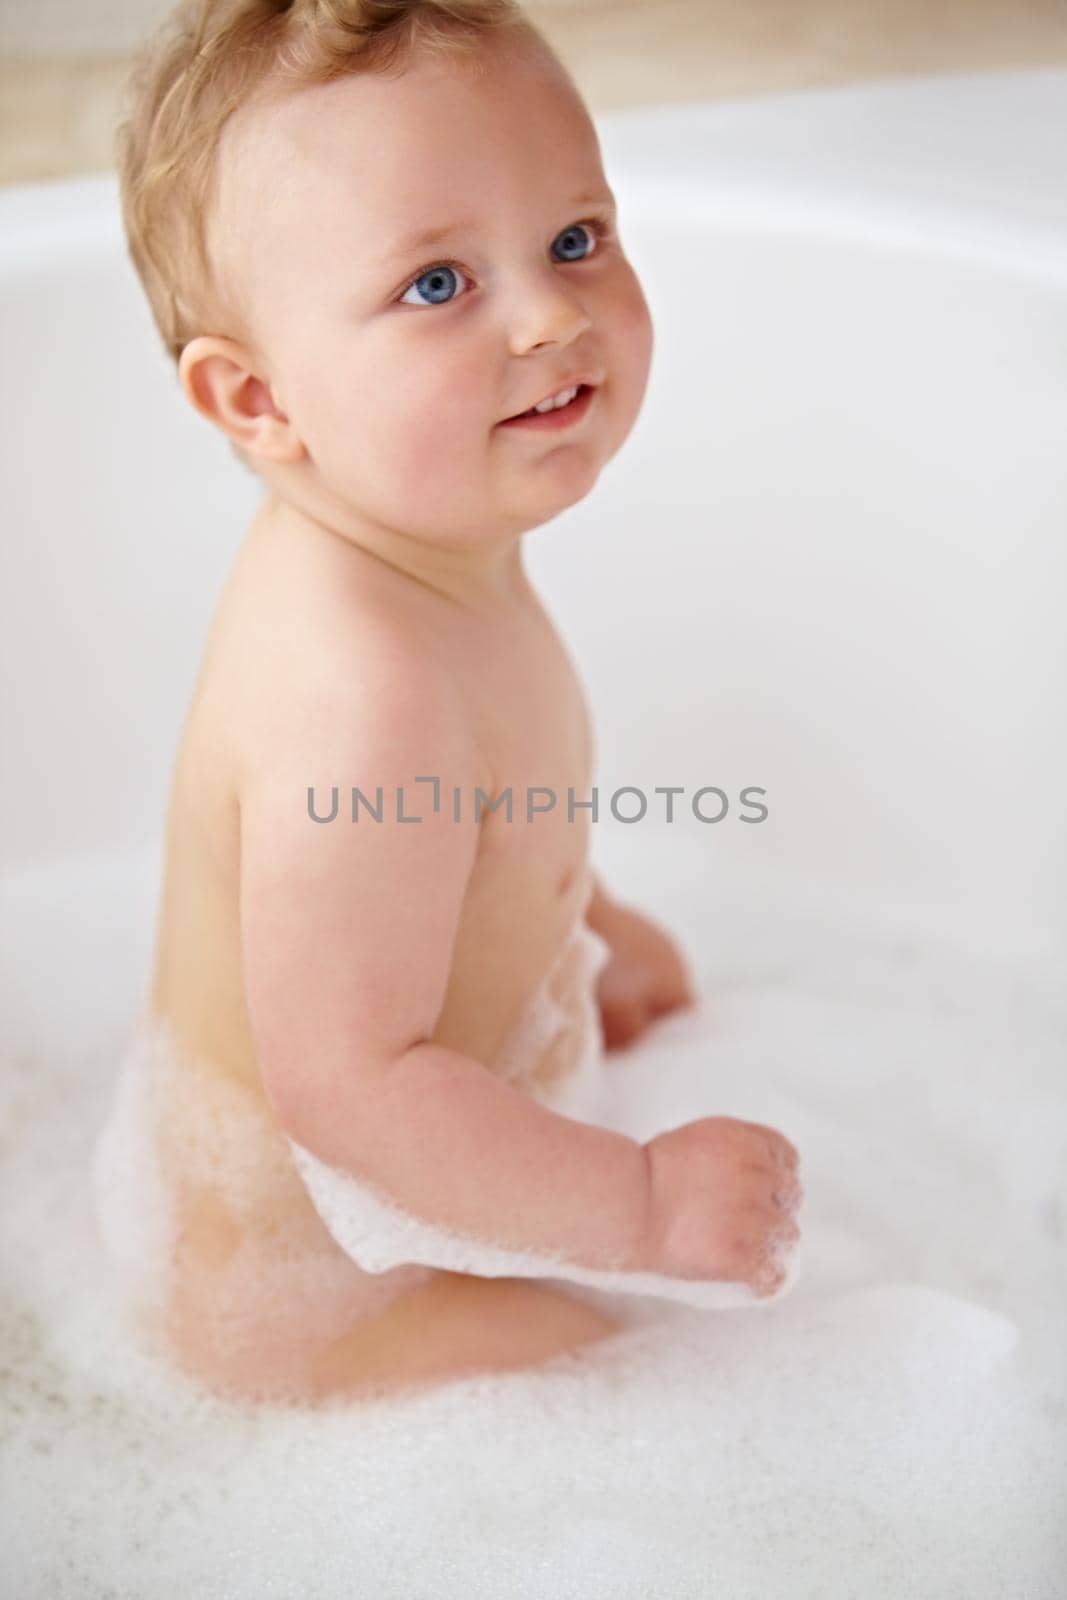 Splish splash. Cropped shot of a baby boy smiling in the bathtub. by YuriArcurs